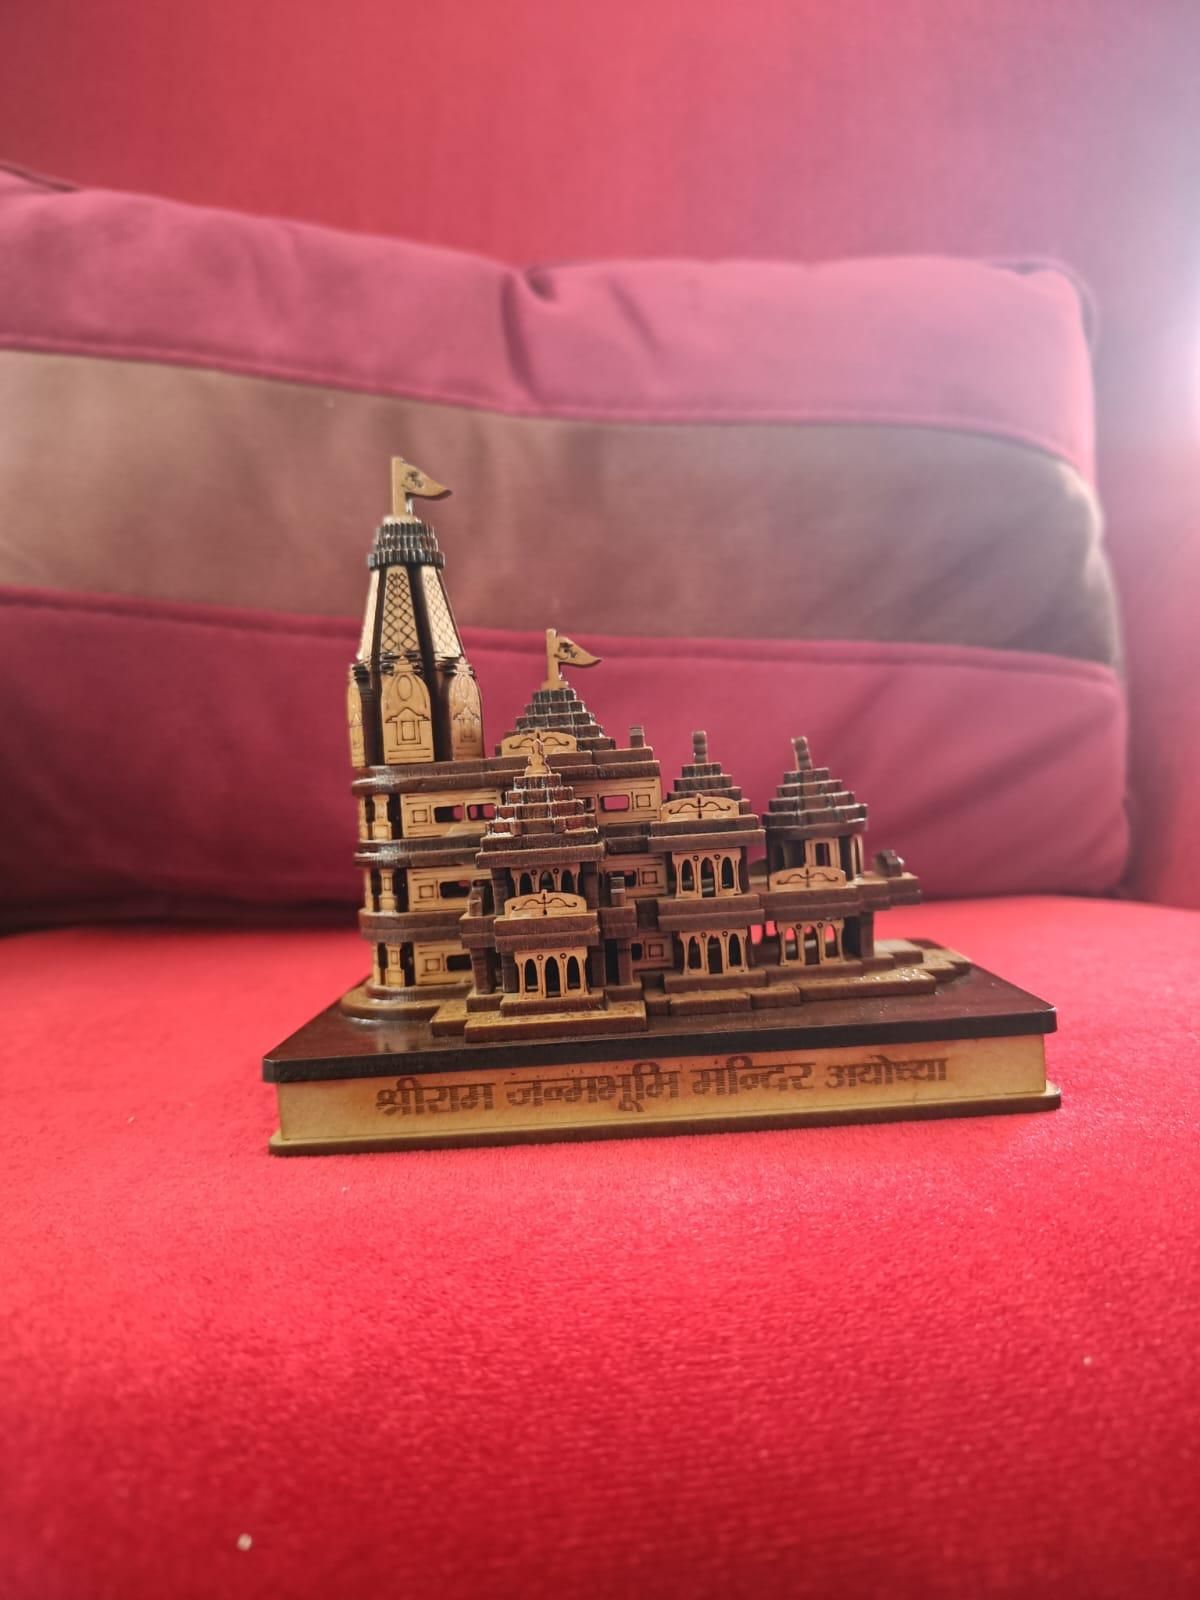 Shri Ram Mandir Ayodhya 3D Model With LED Light